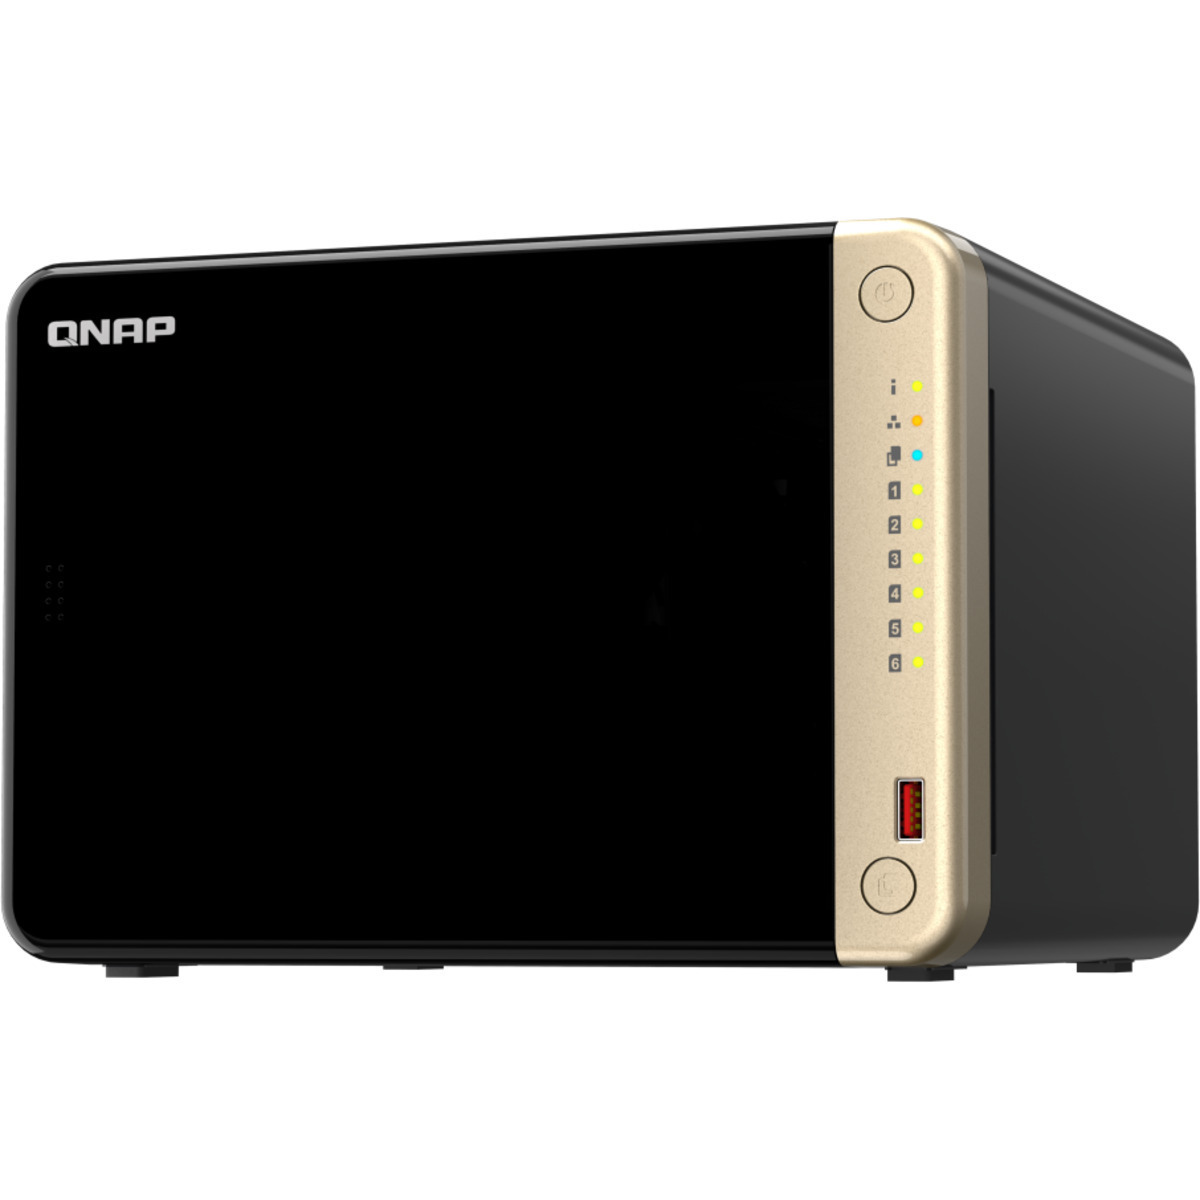 QNAP TS-664 80tb 6-Bay Desktop Multimedia / Power User / Business NAS - Network Attached Storage Device 4x20tb Western Digital Gold WD202KRYZ 3.5 7200rpm SATA 6Gb/s HDD ENTERPRISE Class Drives Installed - Burn-In Tested TS-664